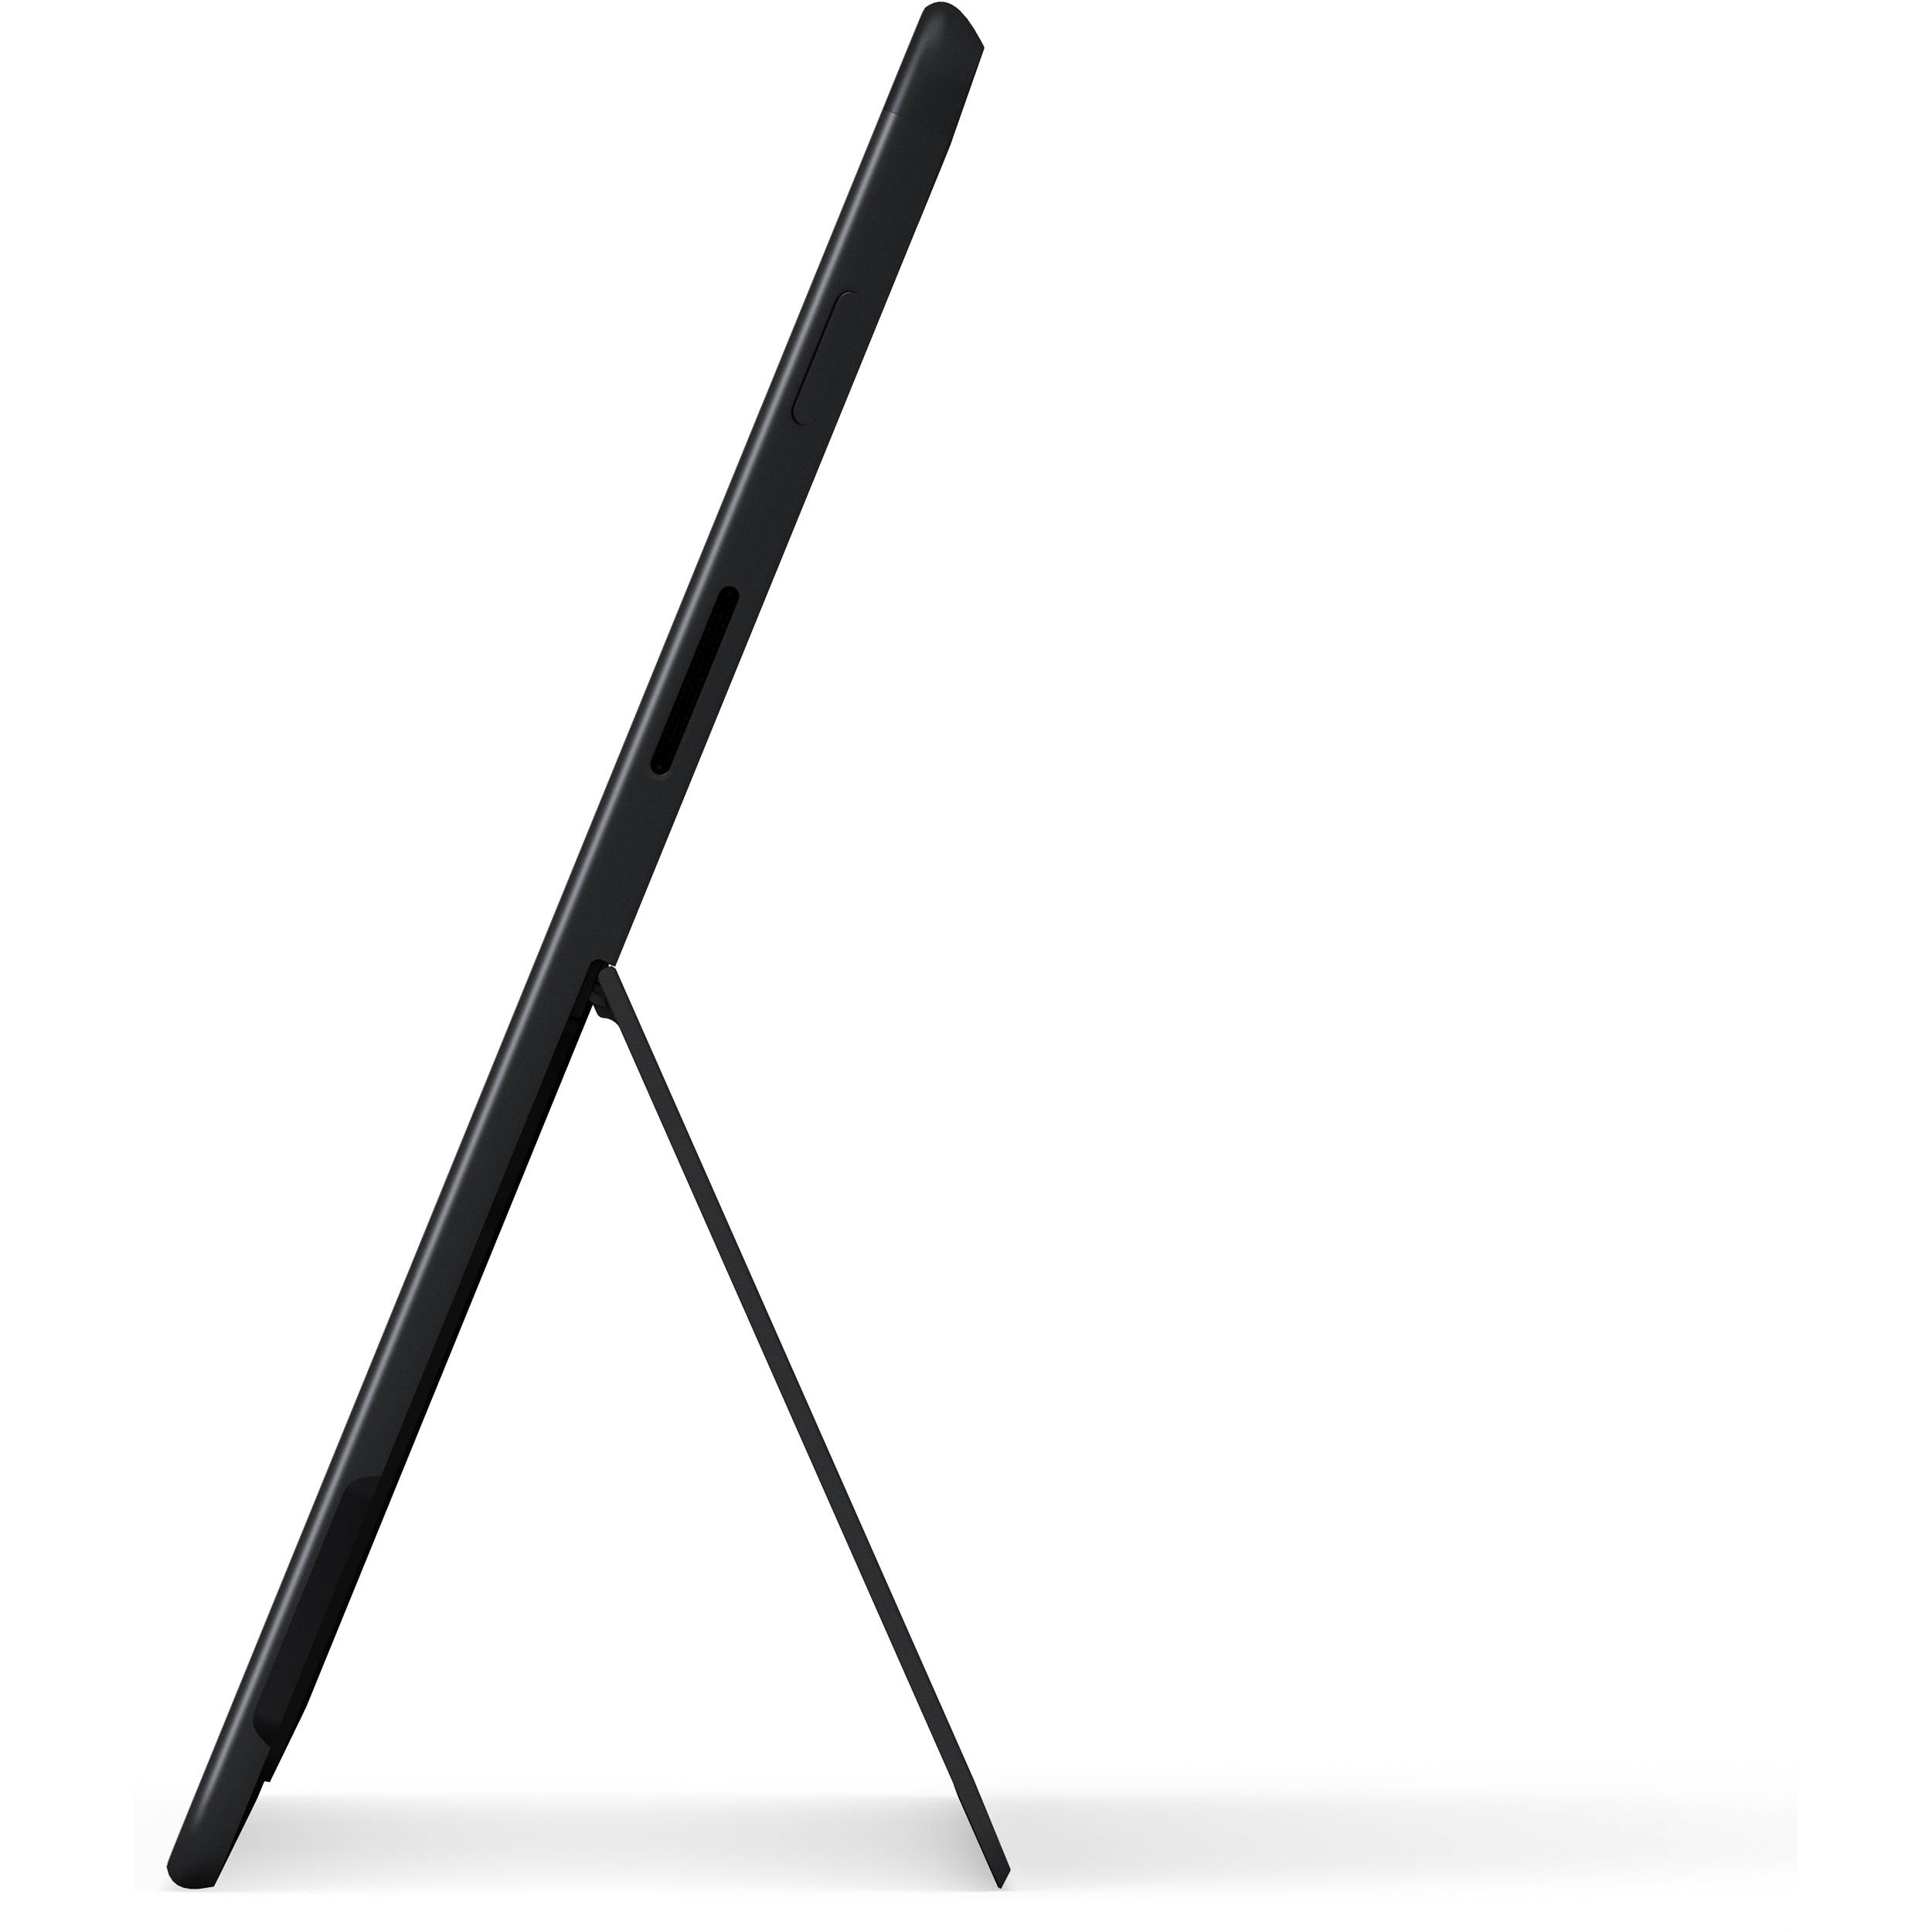 تبلت مایکروسافت مدل Surface Pro X LTE - B ظرفیت 256 گیگابایت به همراه کیبورد Black Type Cover